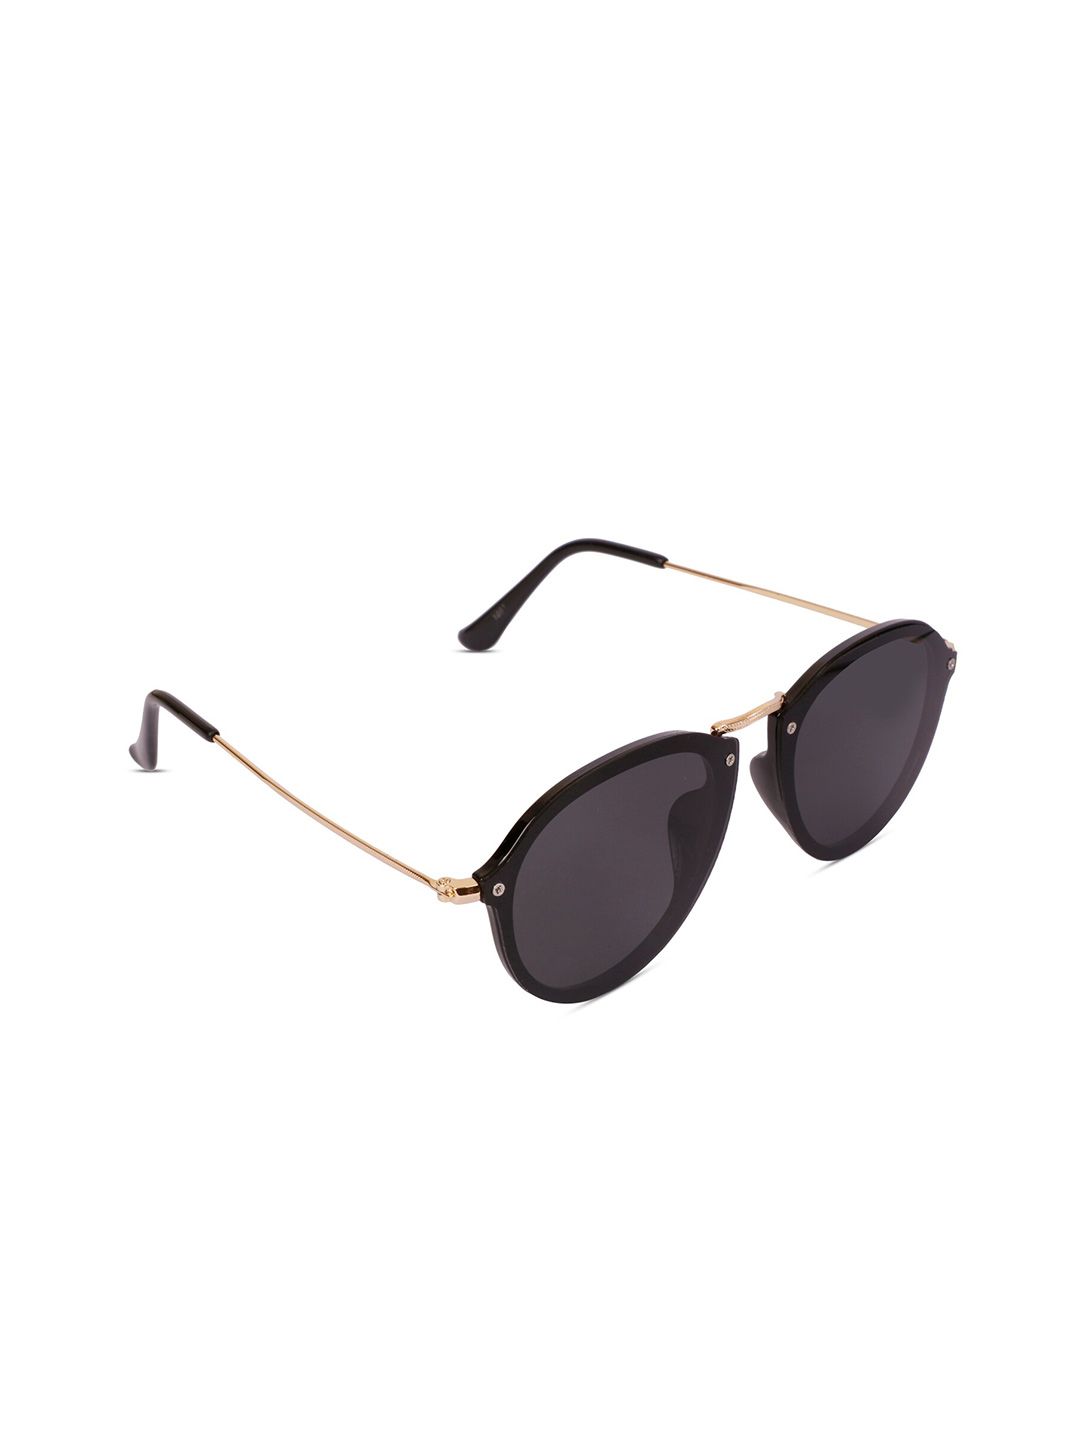 SUNNIES Unisex Black Lens & Black Round Sunglasses with Polarised and UV Protected Lens Price in India